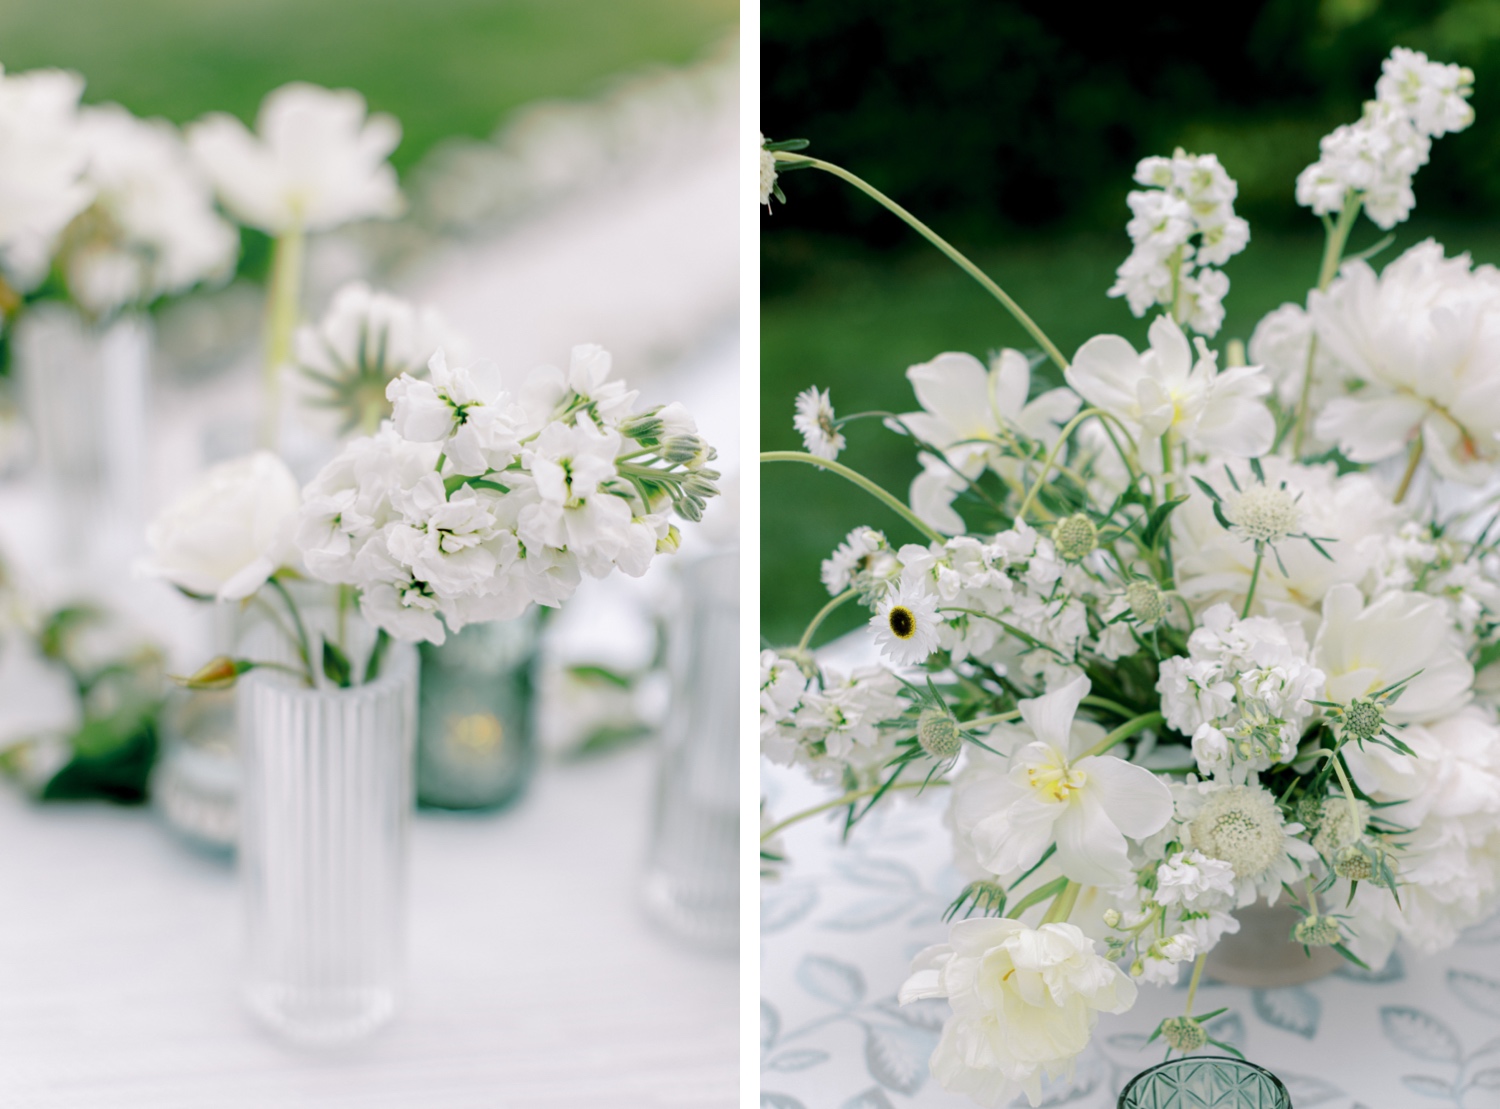 Wedding floral centerpiece by Luxury Blooms